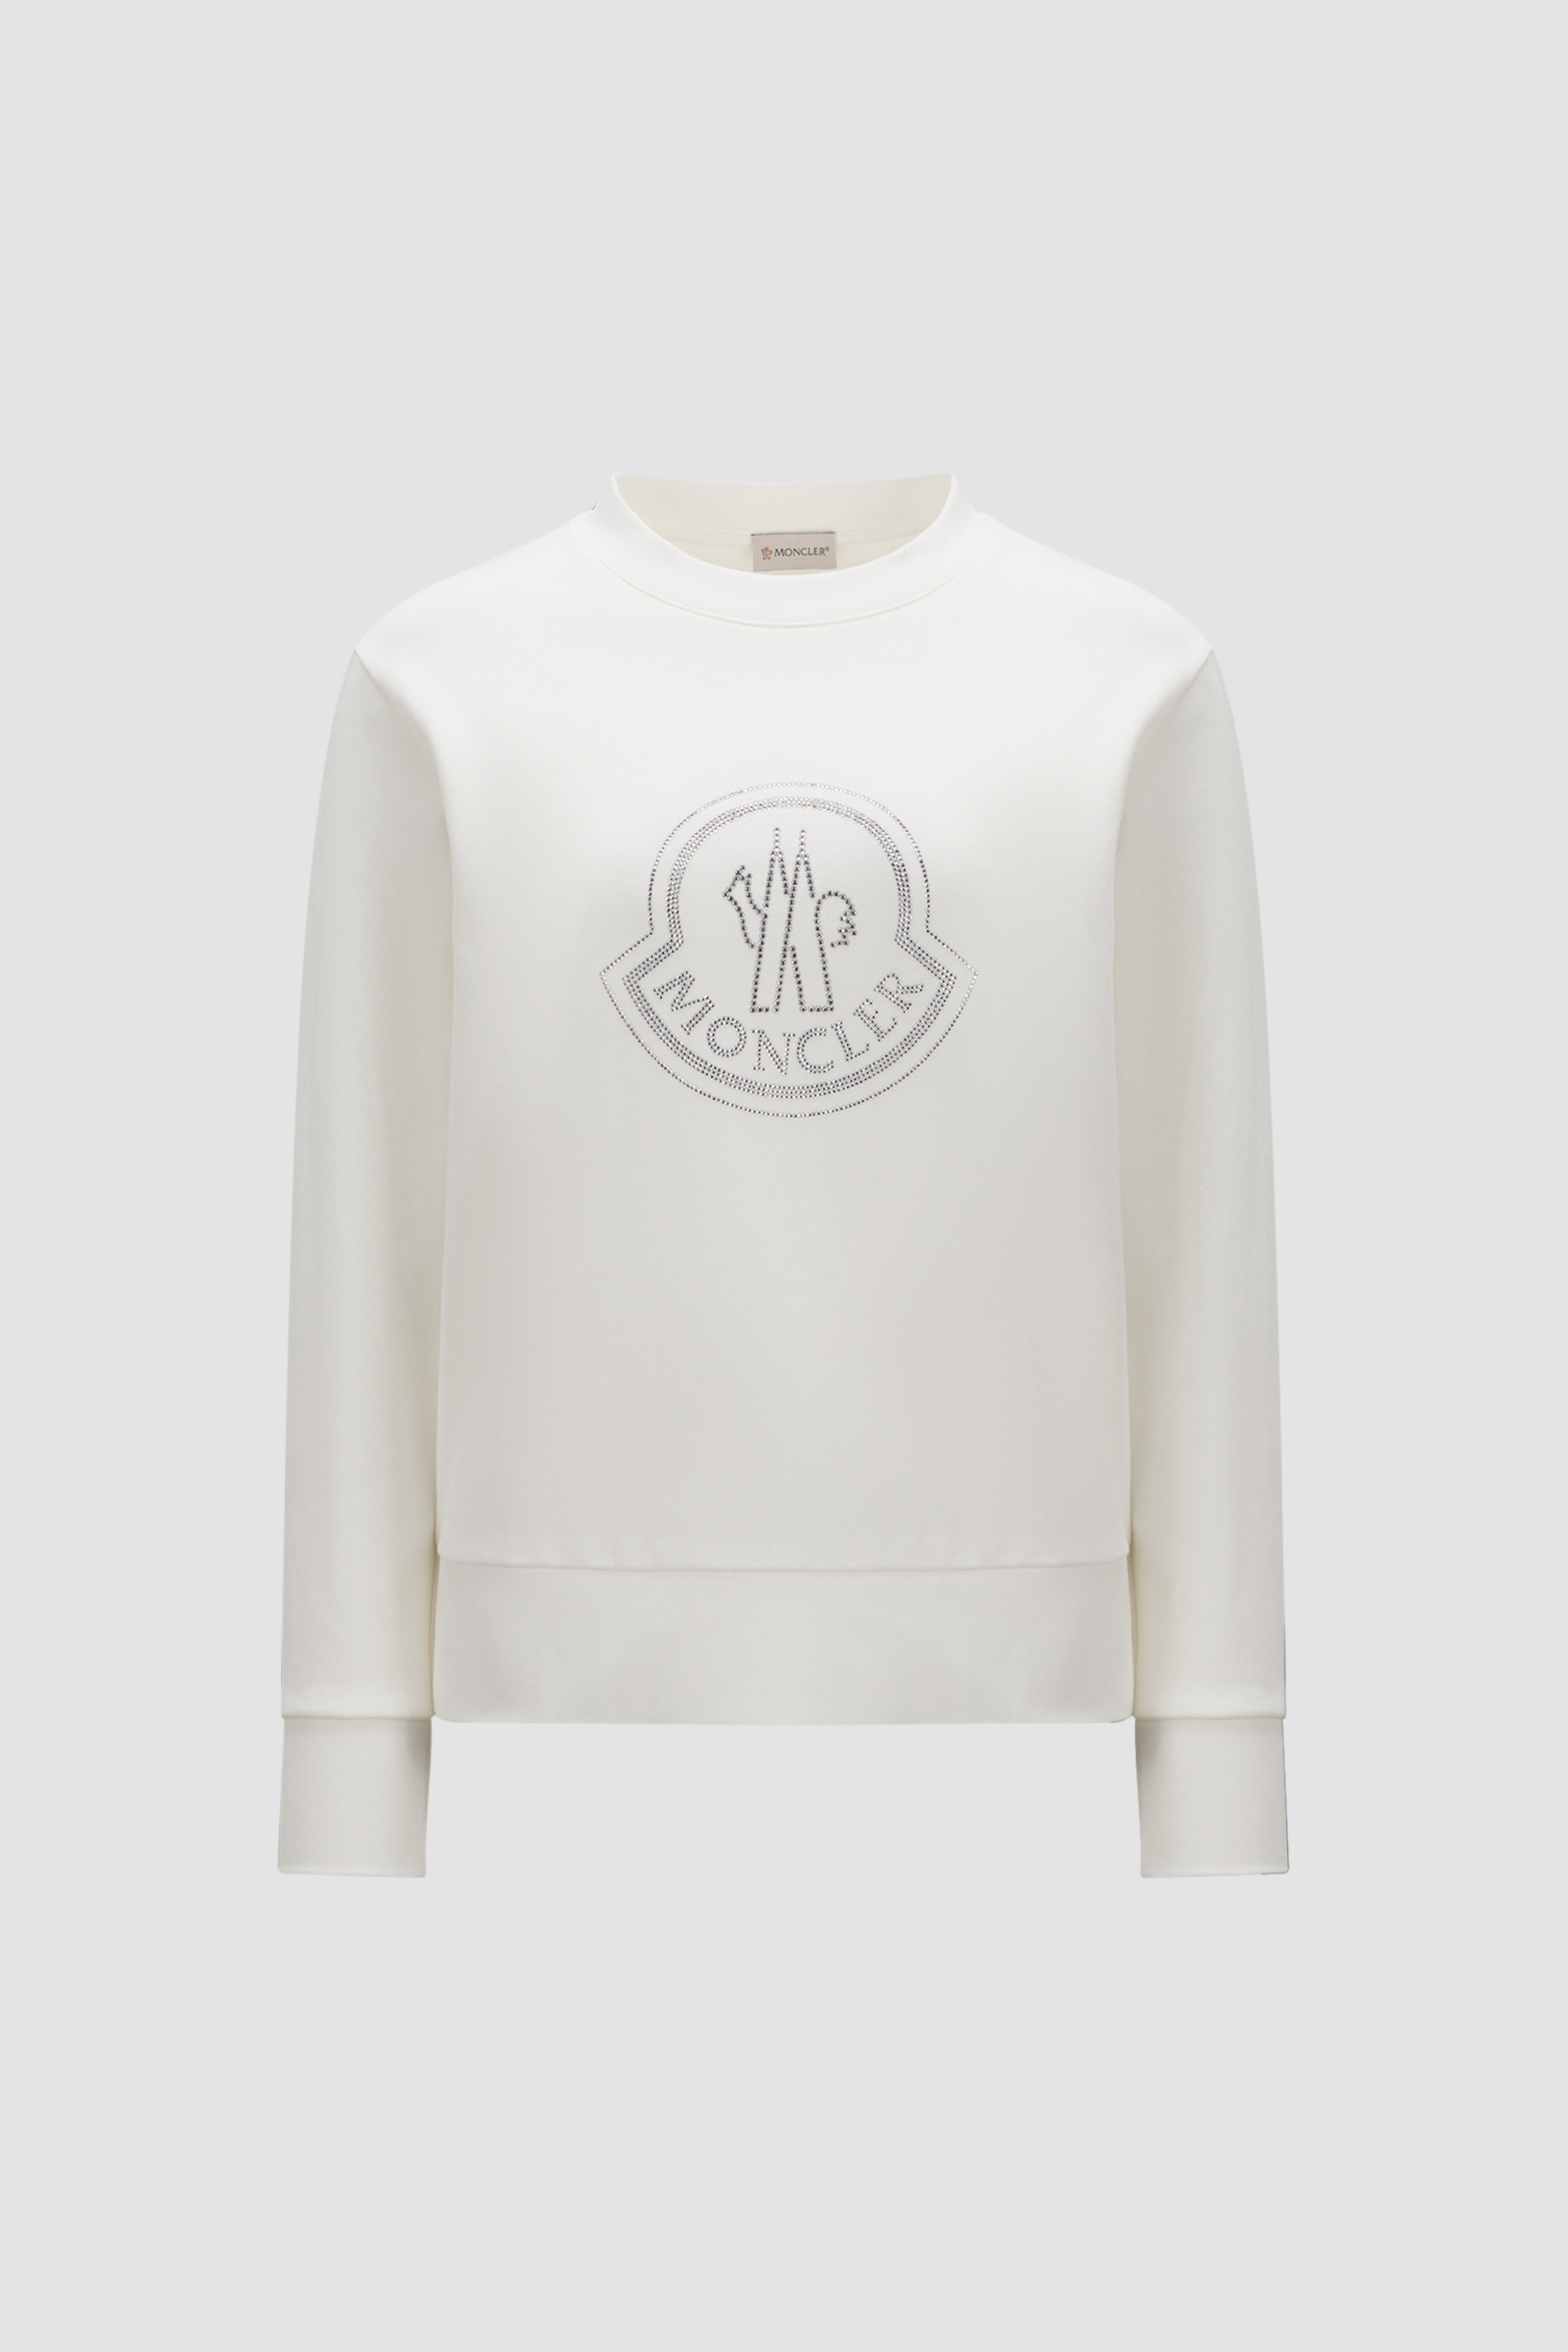 Moncler Sweatshirt with crystal logo, Women's Clothing